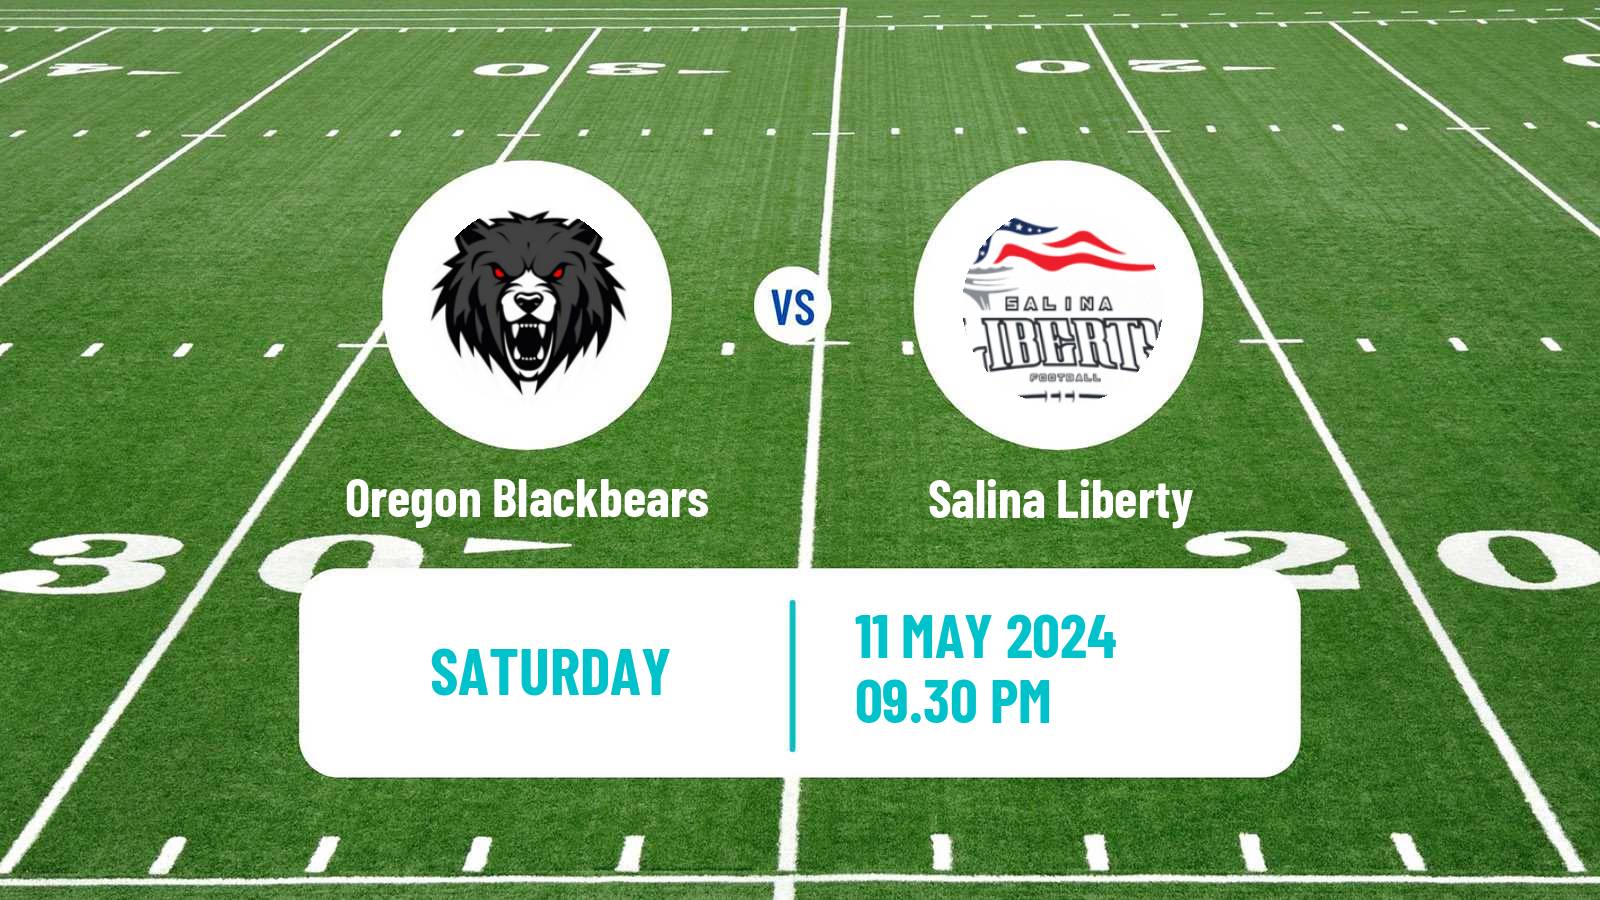 Arena football Arena Football League Oregon Blackbears - Salina Liberty